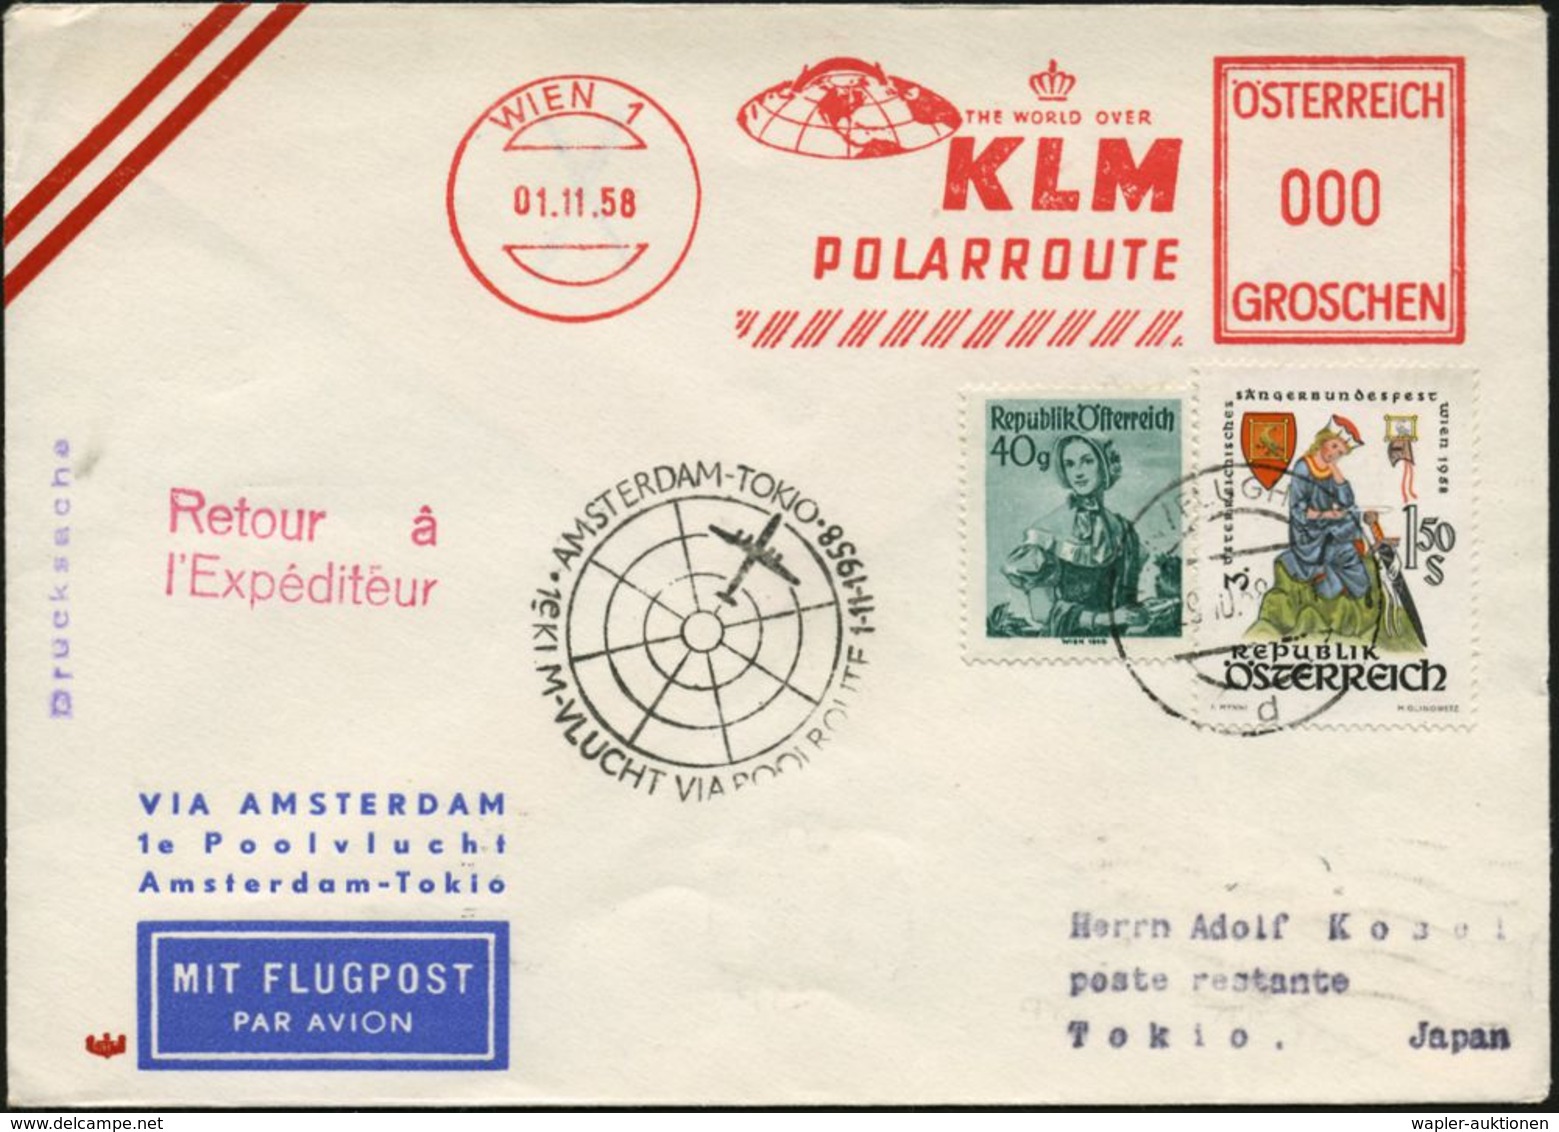 ÖSTERREICH 1958 (1.11.) Erstflug-Bf. (KLM): Amsterdam - Tokyo Via Nordpol (AS) AFS 000: WIEN 1/KLM/POLARROUTE (nördl. Gl - Spedizioni Artiche